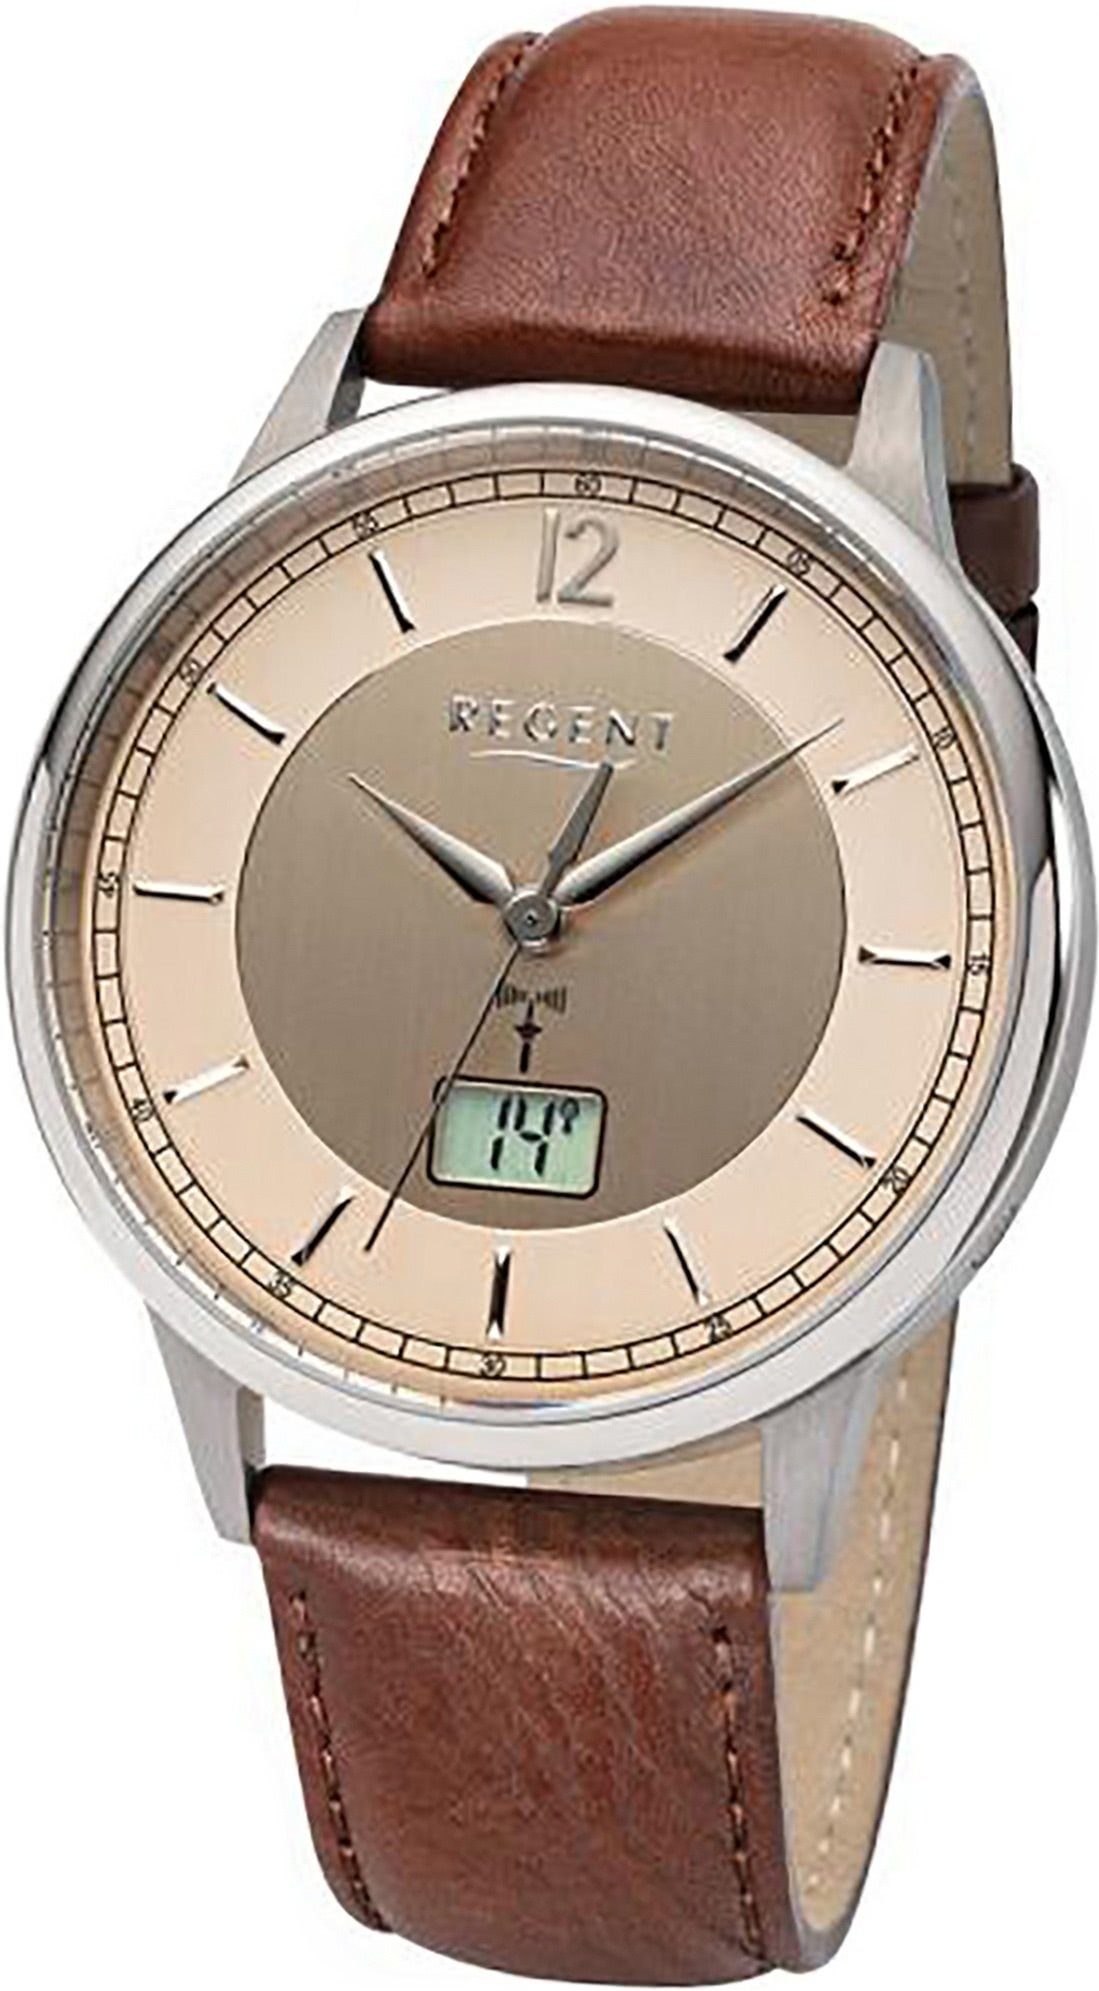 Regent Funkuhr Regent Leder Herren Uhr FR-249, Herrenuhr mit Lederarmband, rundes Gehäuse (ca. 41mm), Elegant-Style